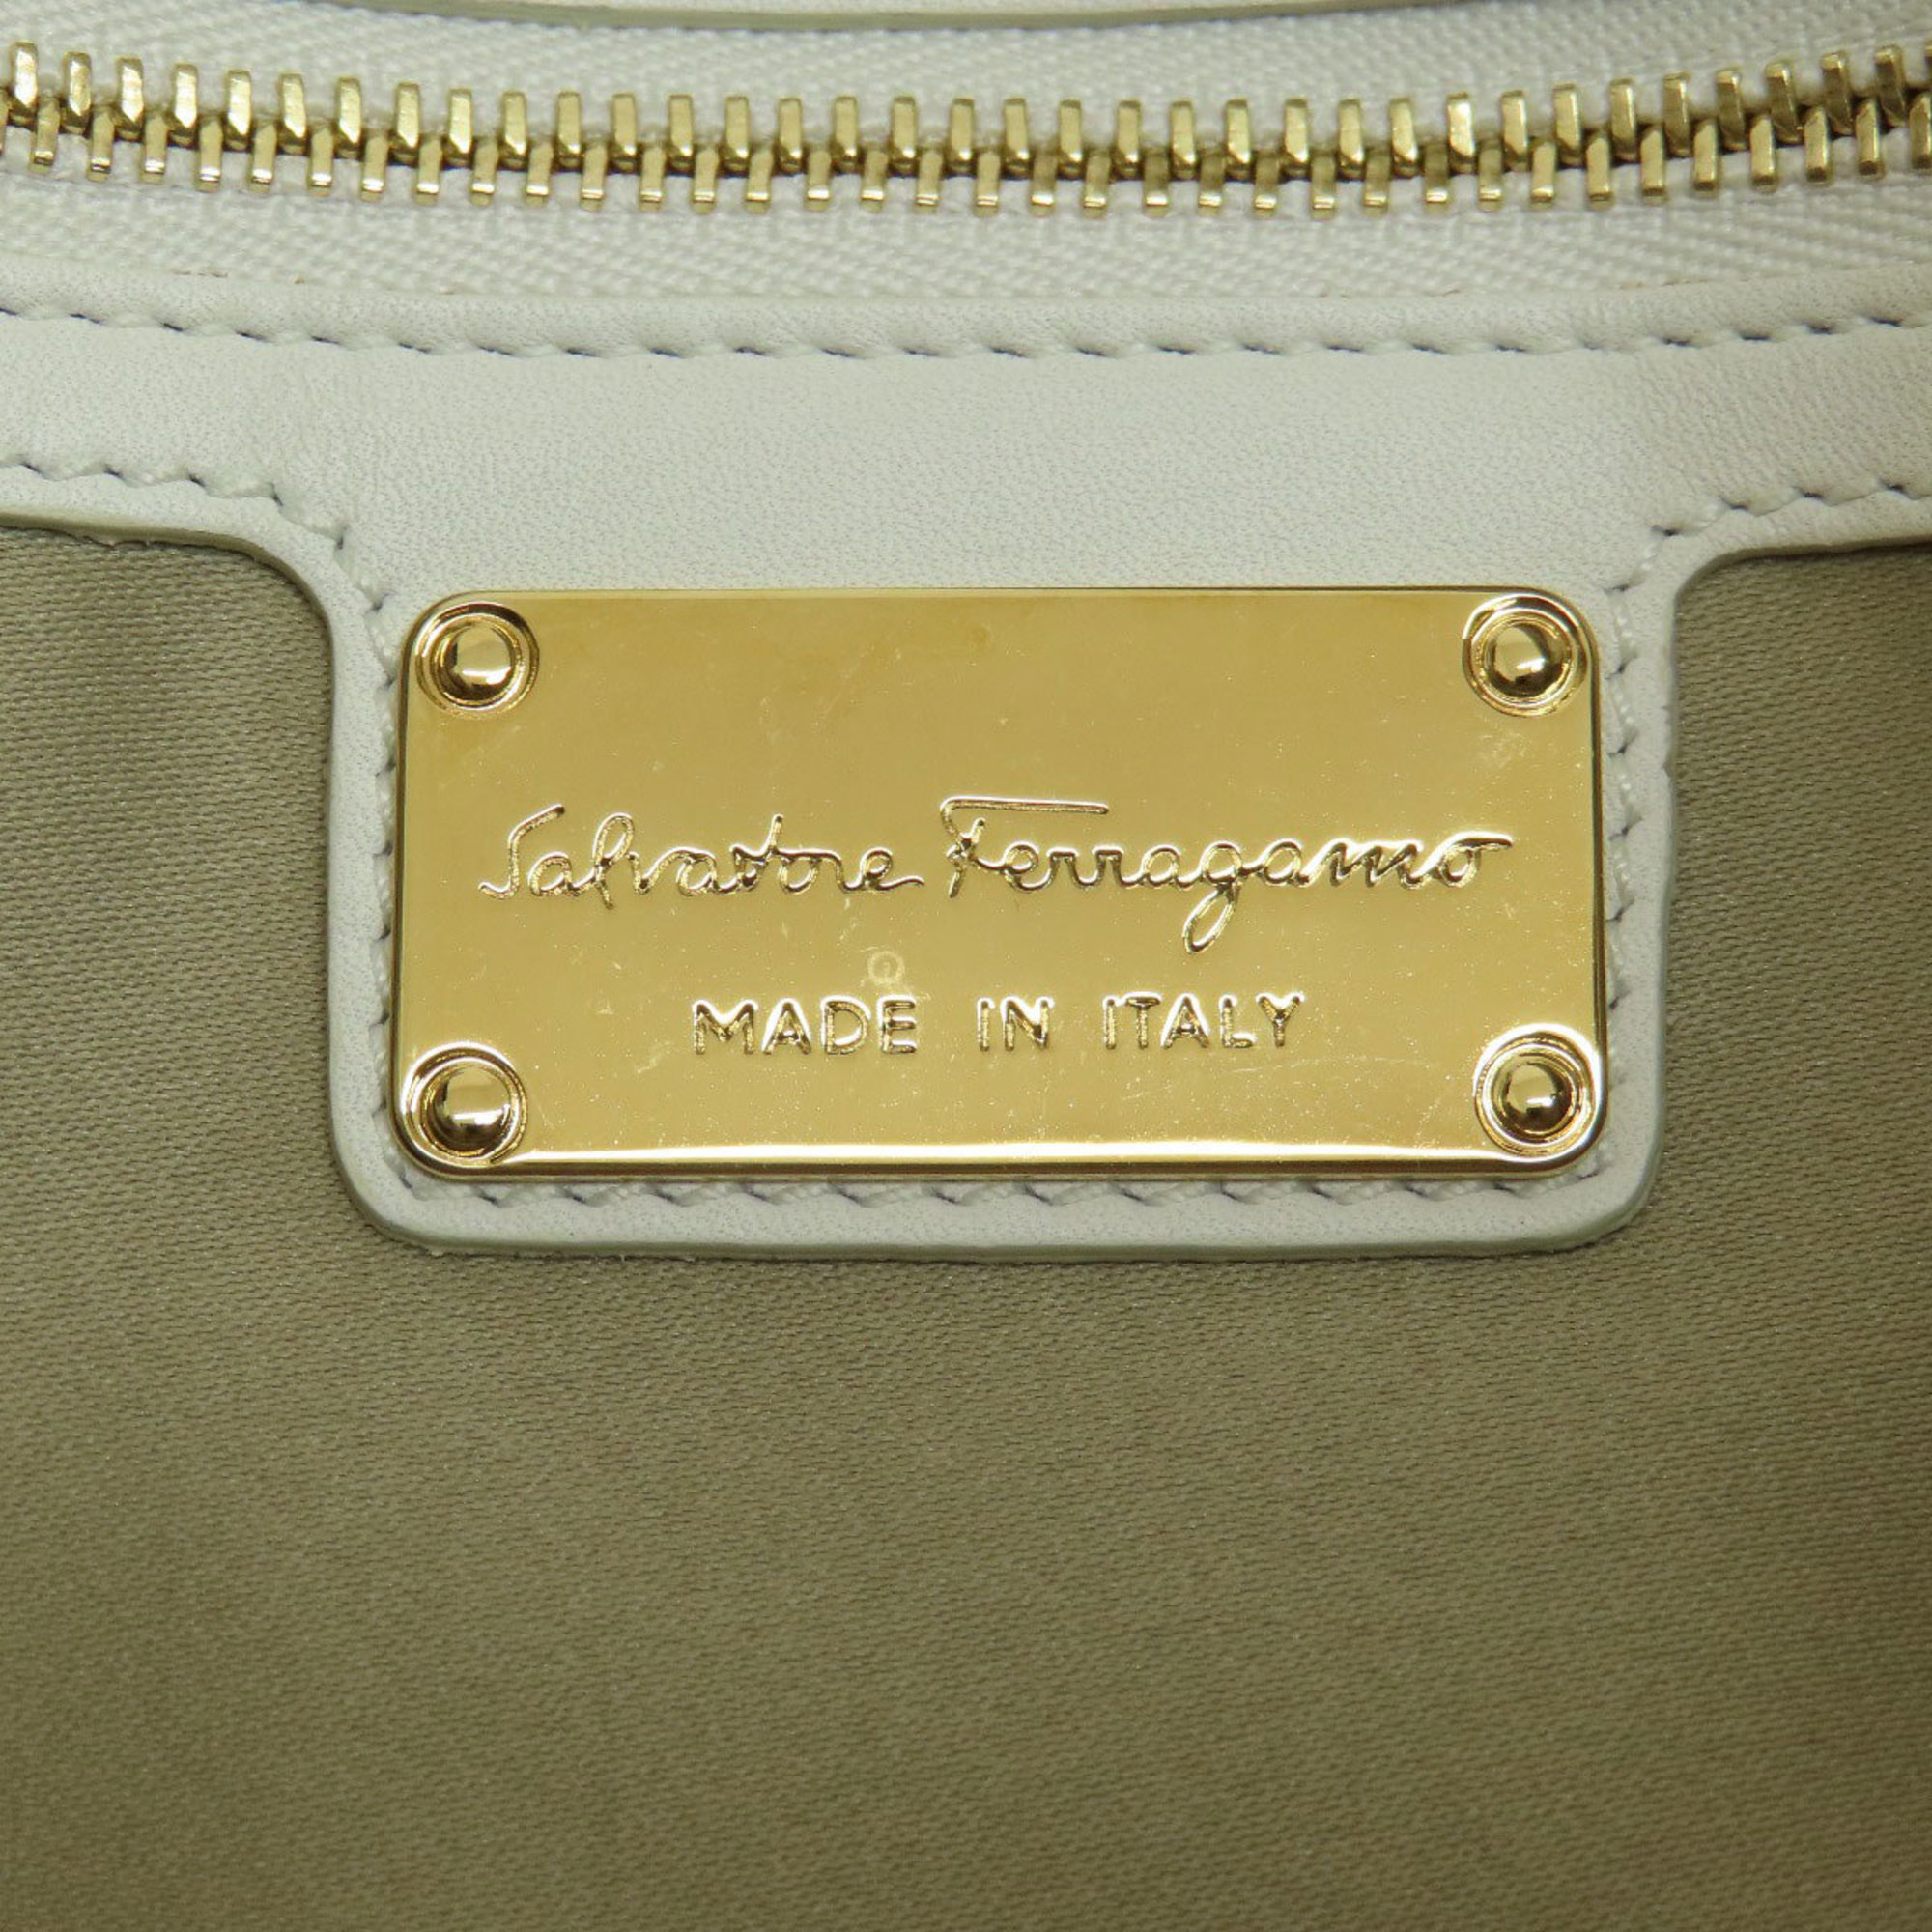 Salvatore Ferragamo Gancini metal motif handbag leather ladies